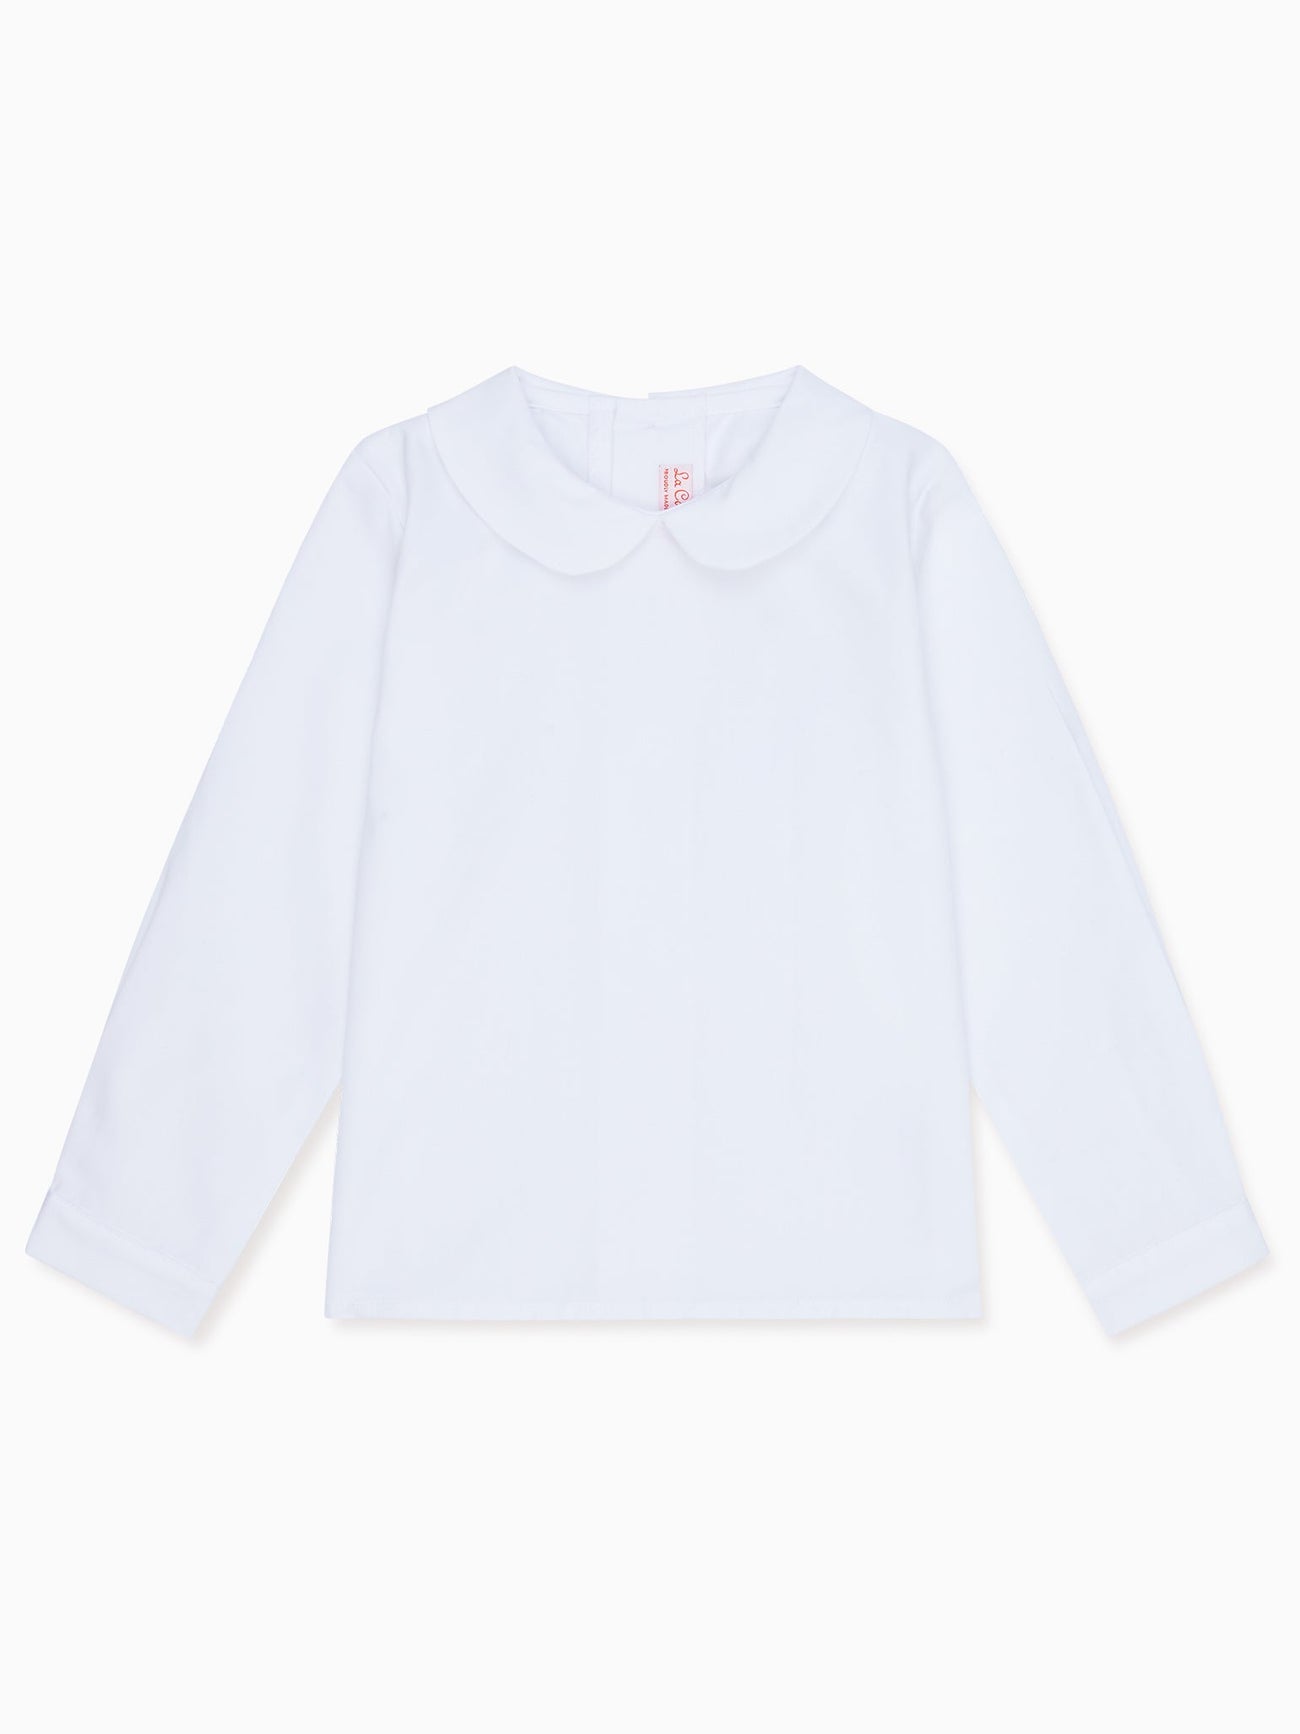 White Clio Long Sleeve Baby Shirt